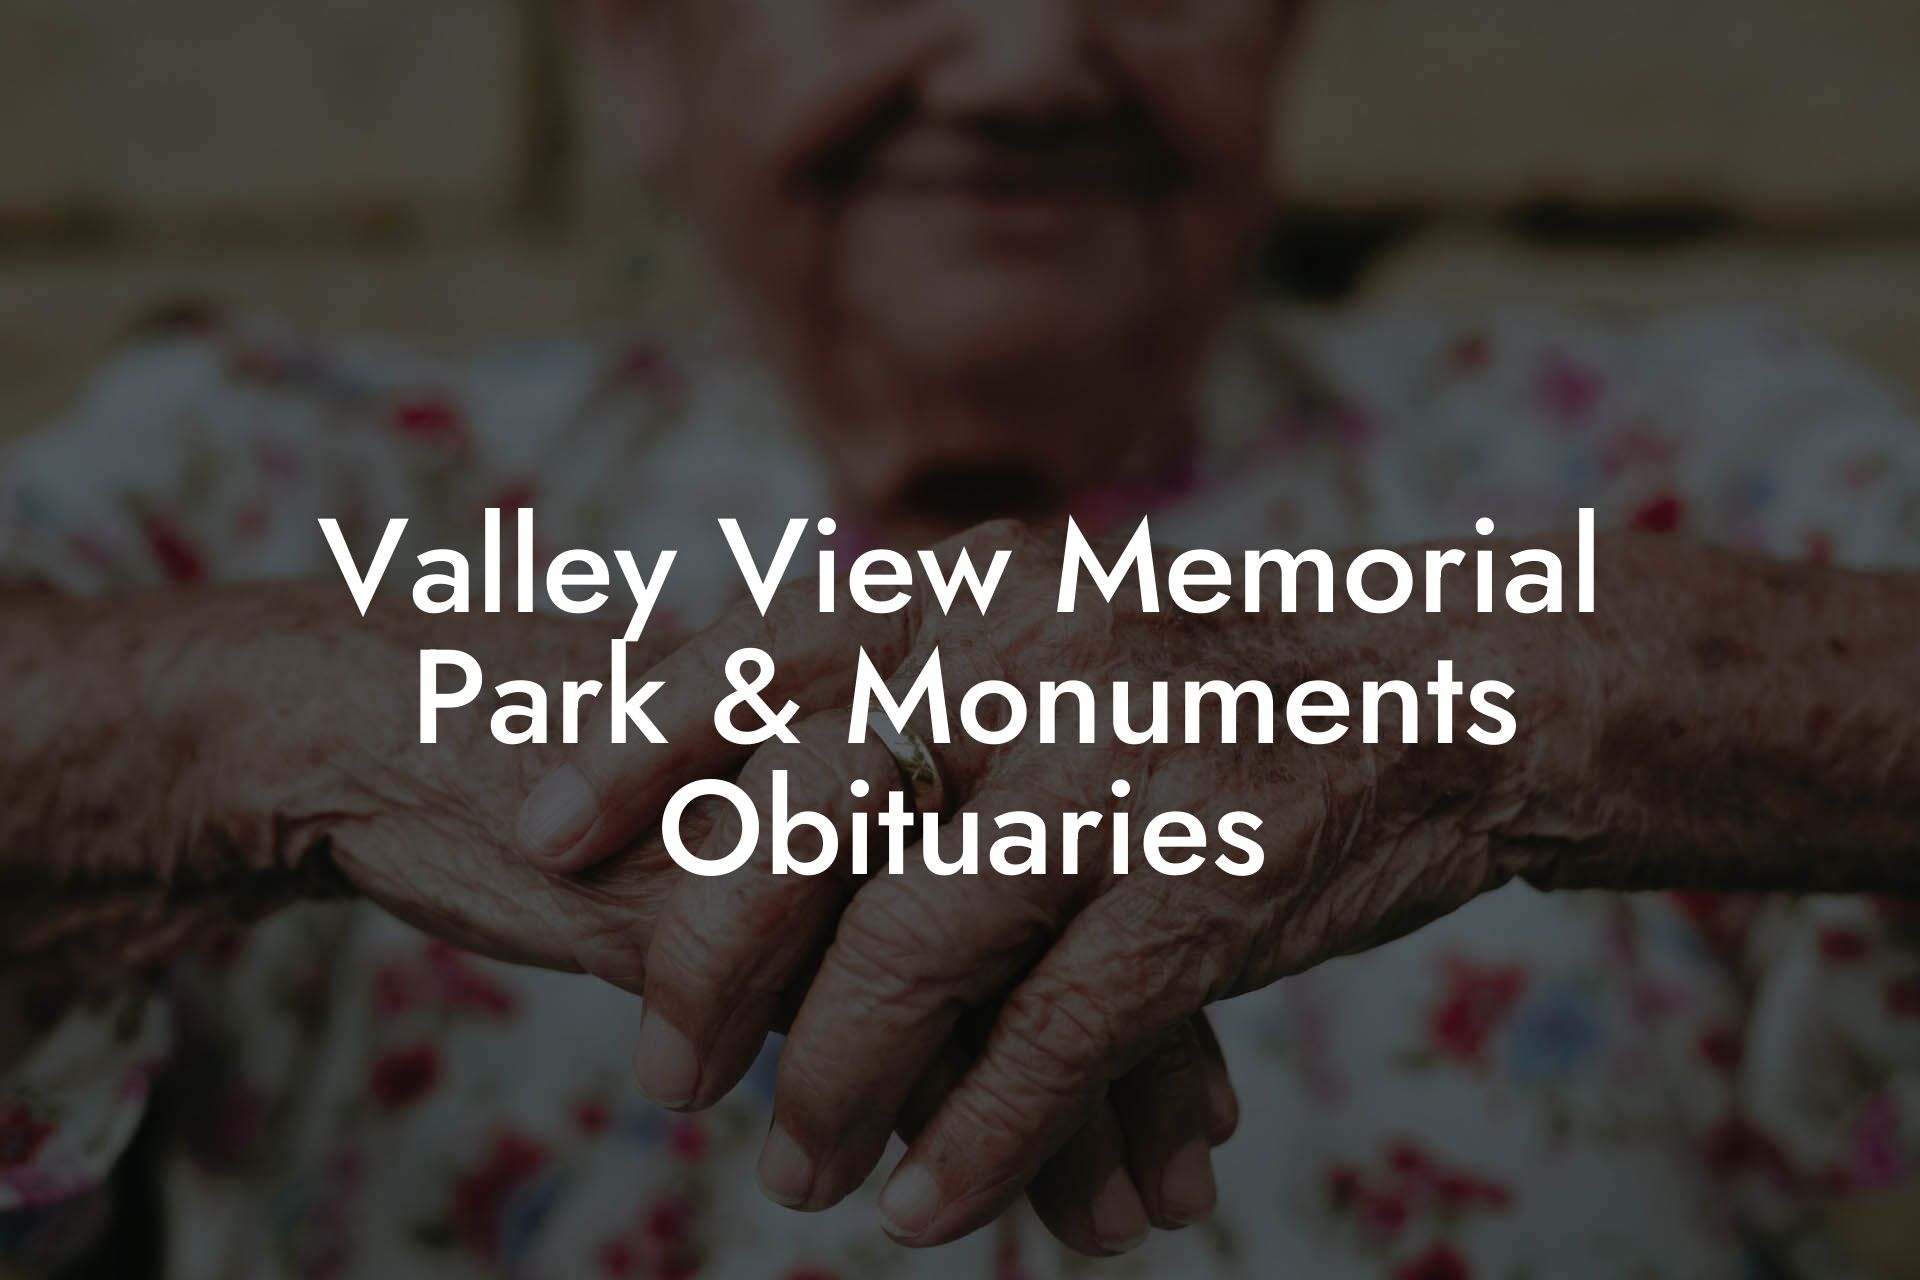 Valley View Memorial Park & Monuments Obituaries